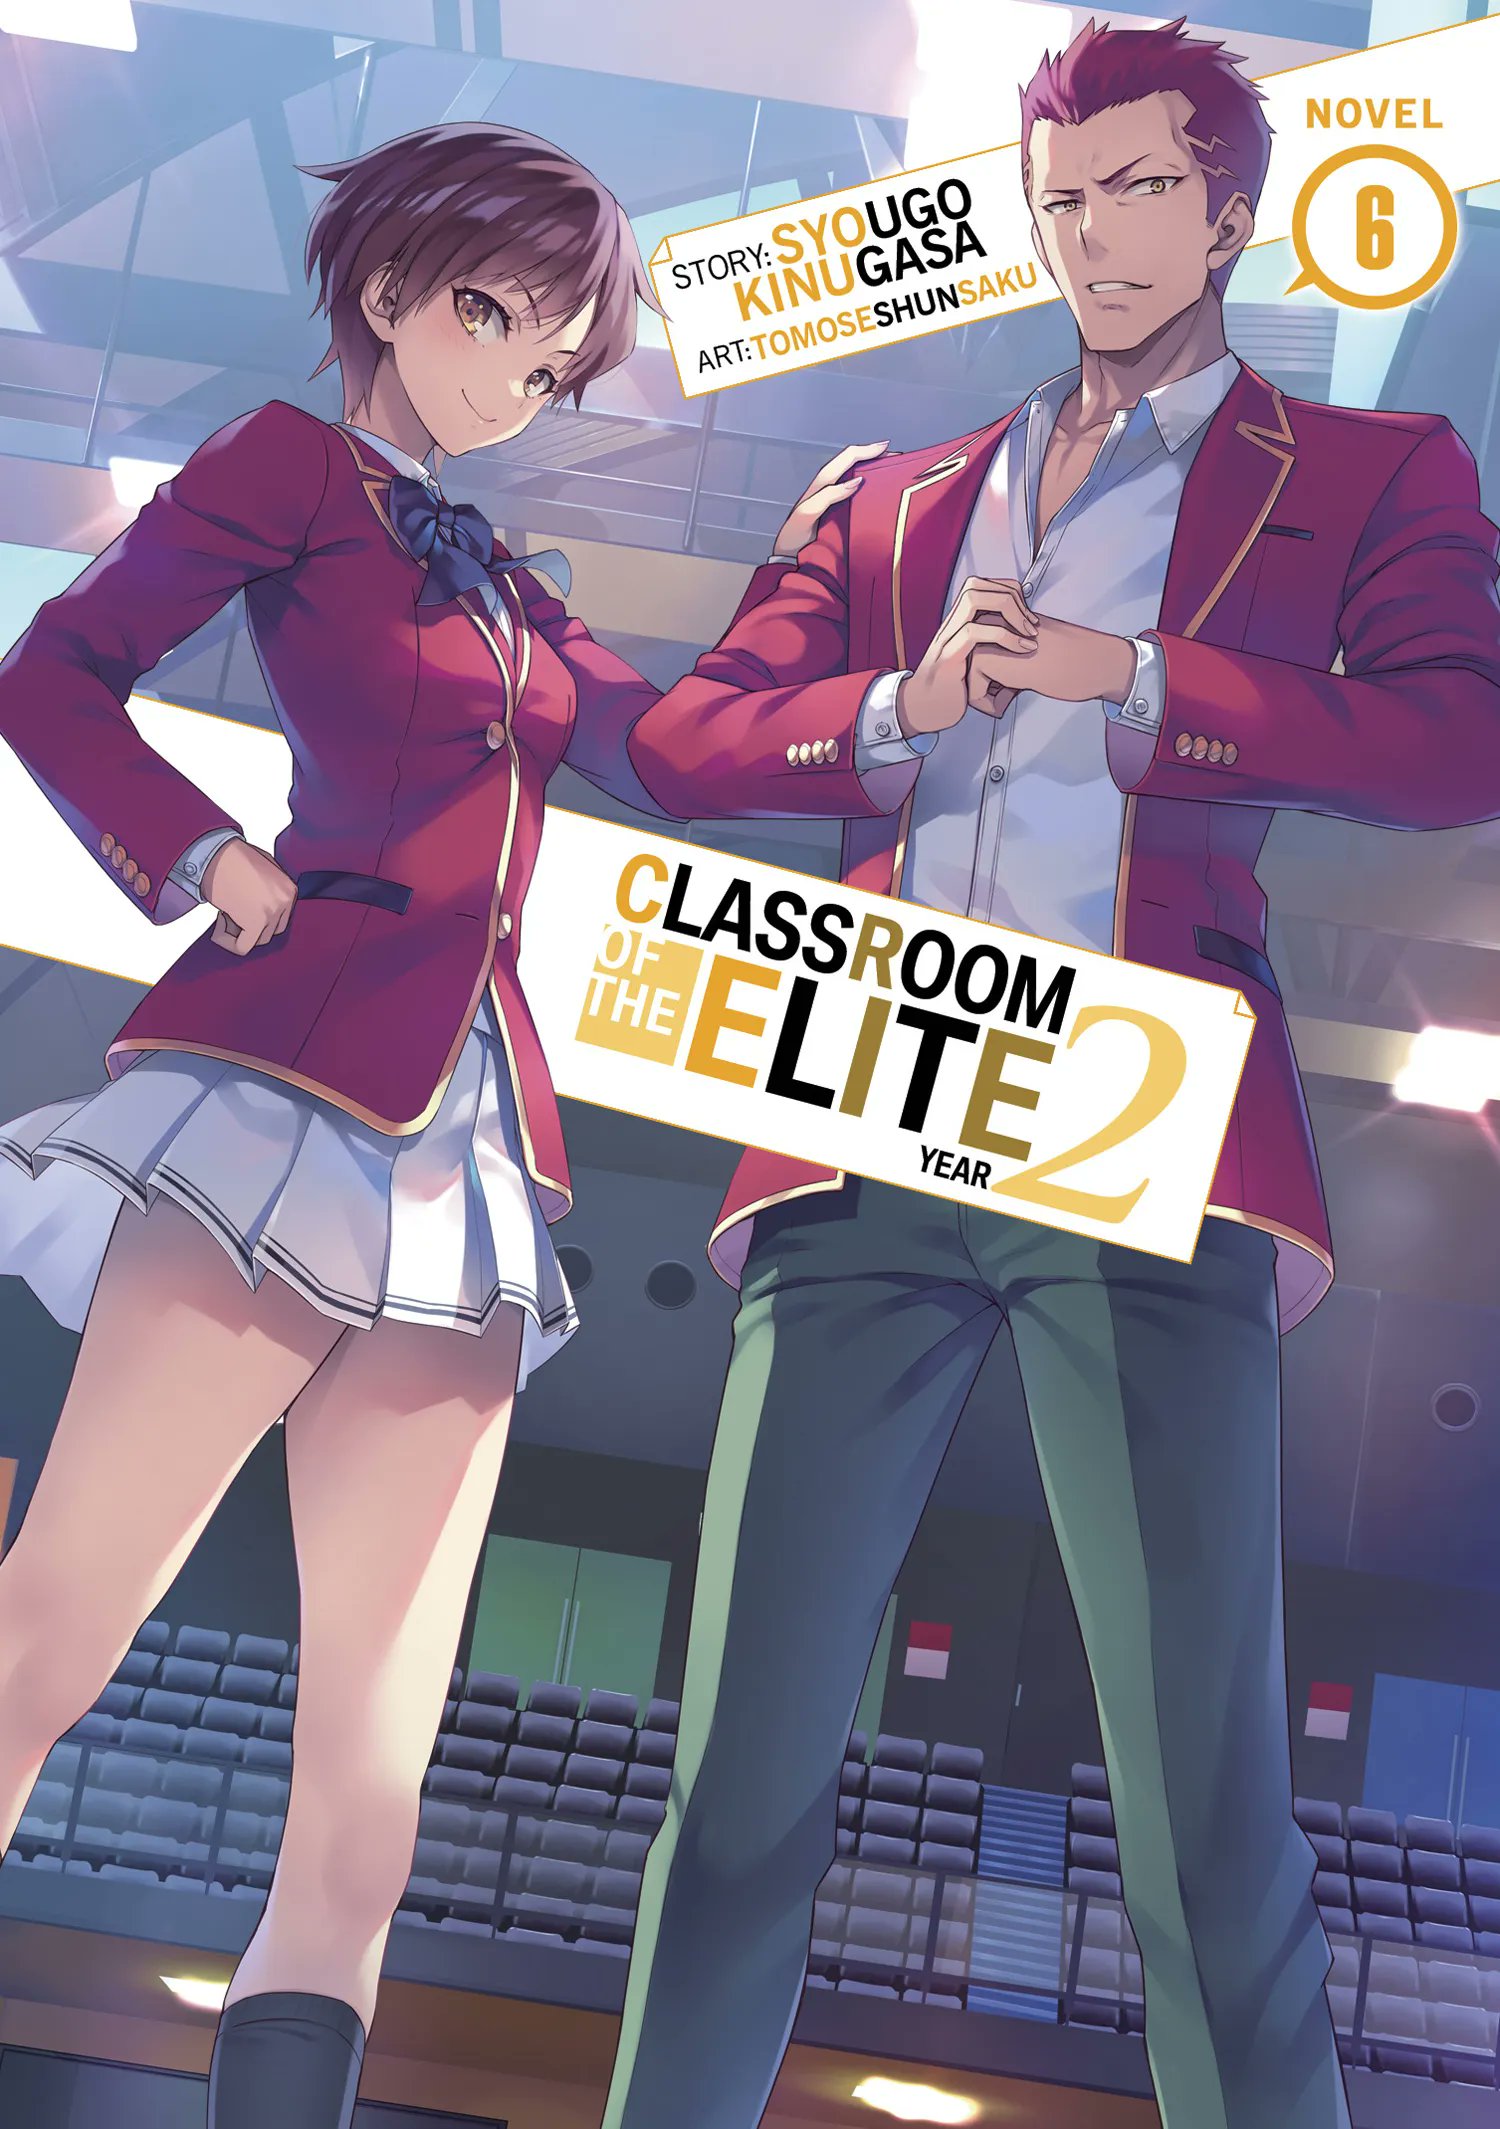 Classroom of Elites vol 7  Anime classroom, Classroom, Anime